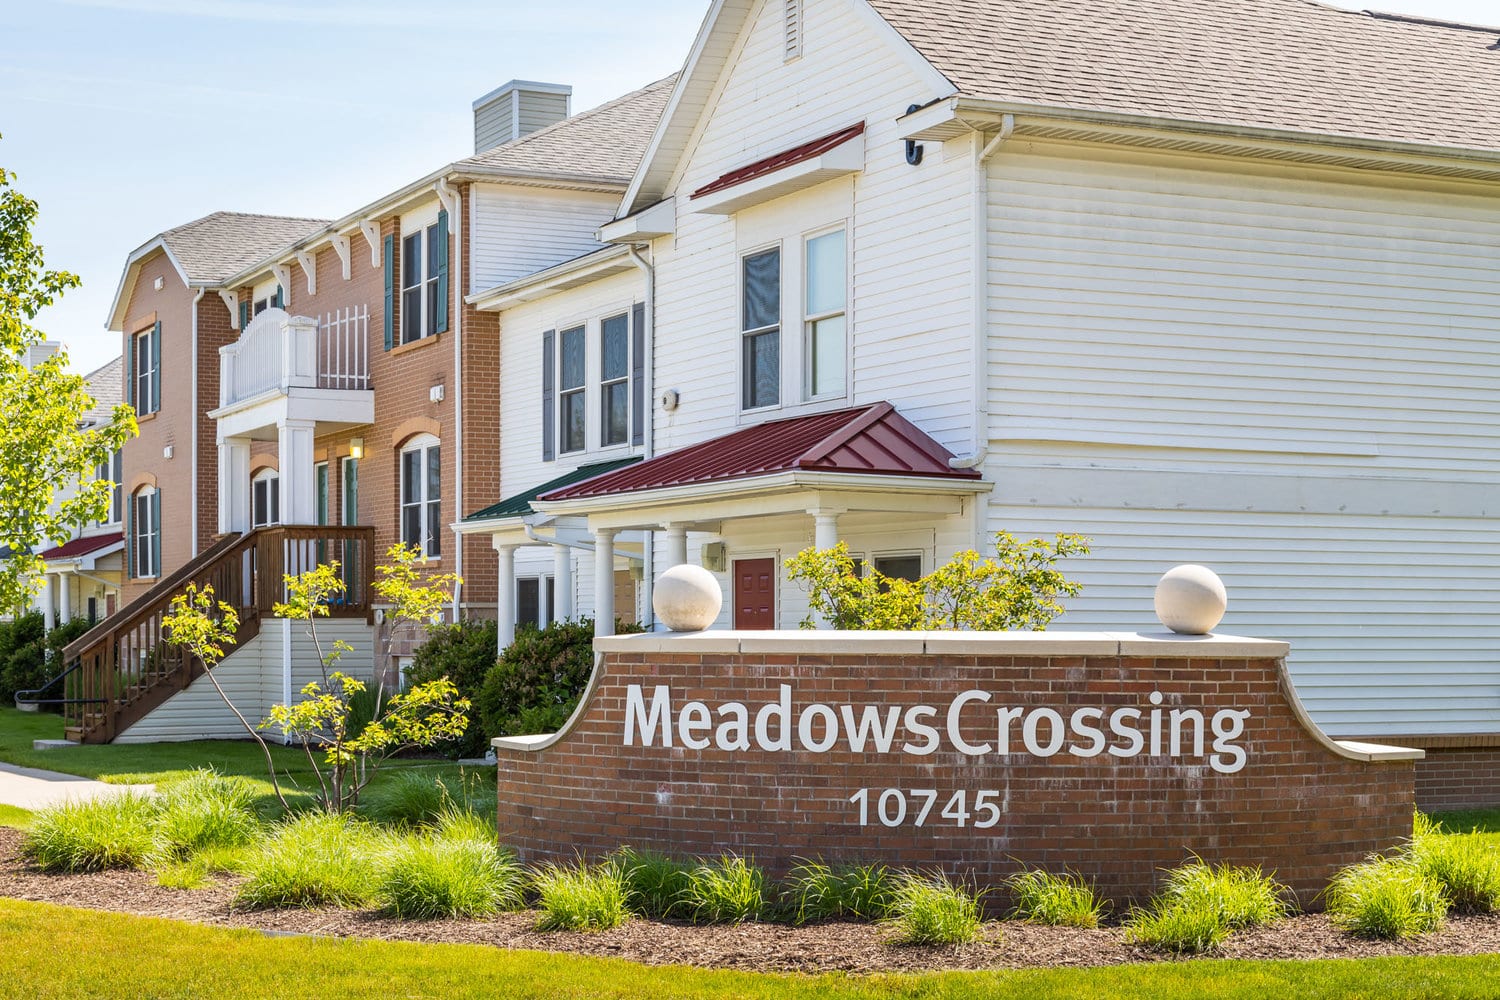 9-meadows-crossing-6-2-17-14